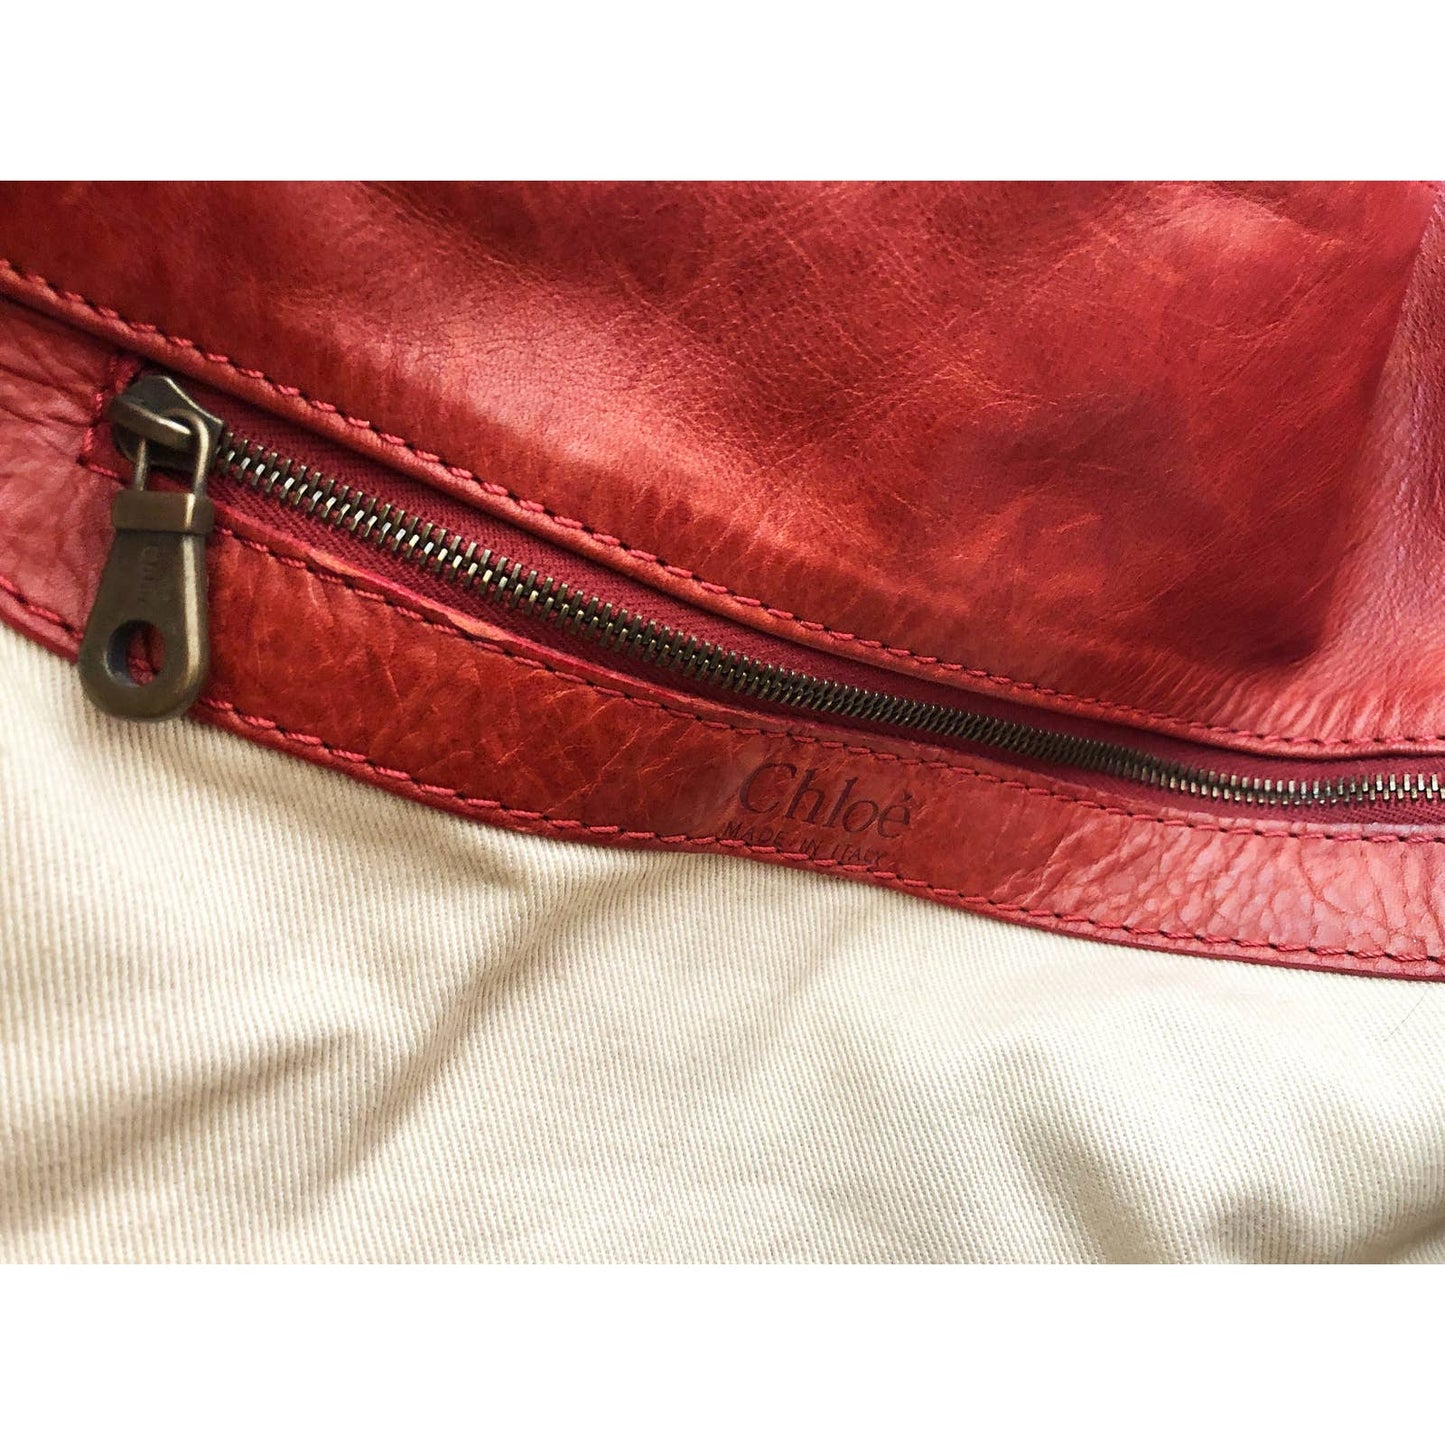 Chloé Silverado Burnt Orange Iconic Leather Shoulder Bag